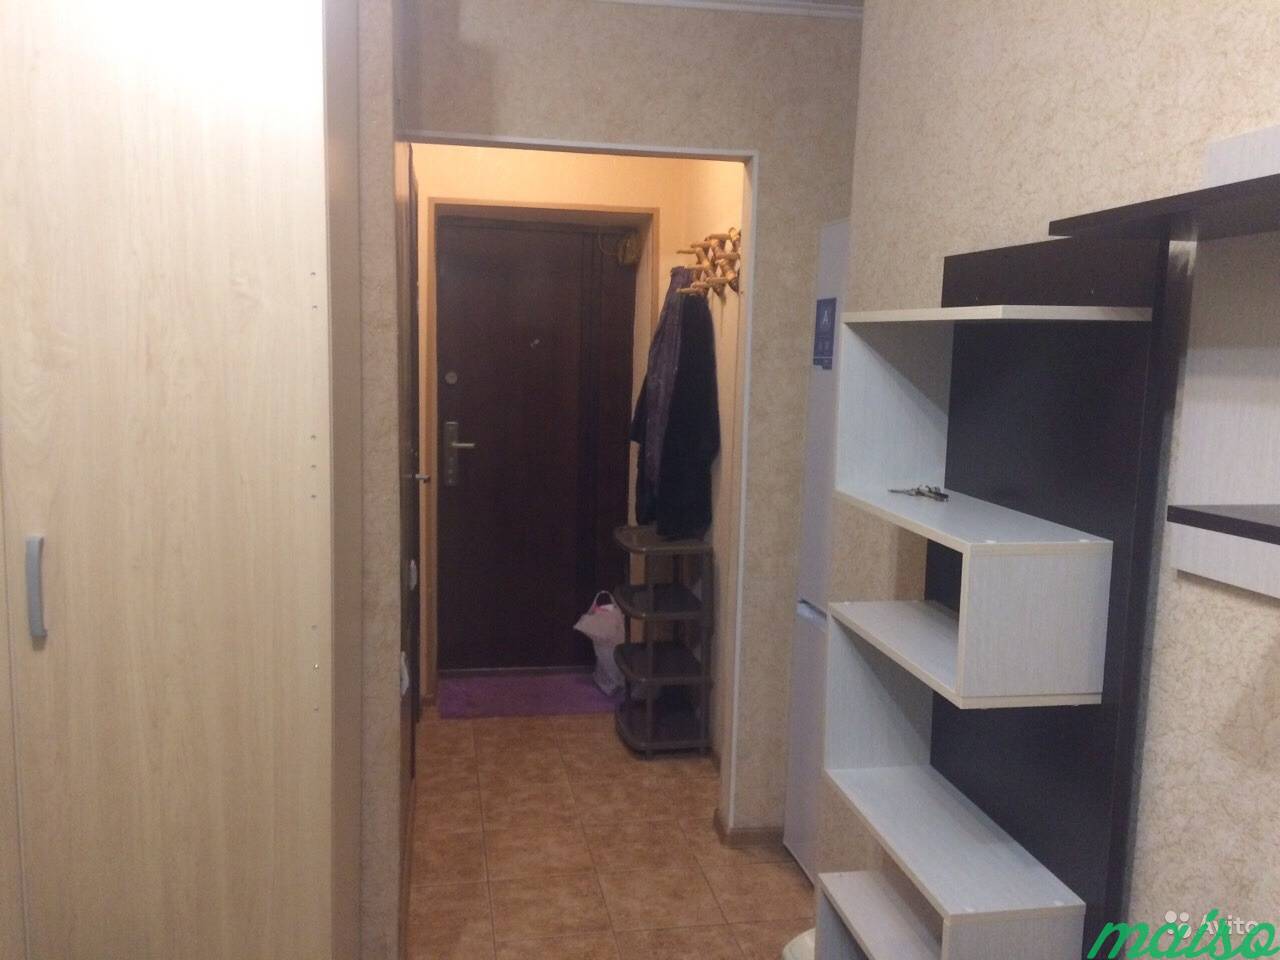 Комната 14 м² в >, 9-к, 2/6 эт. в Санкт-Петербурге. Фото 5